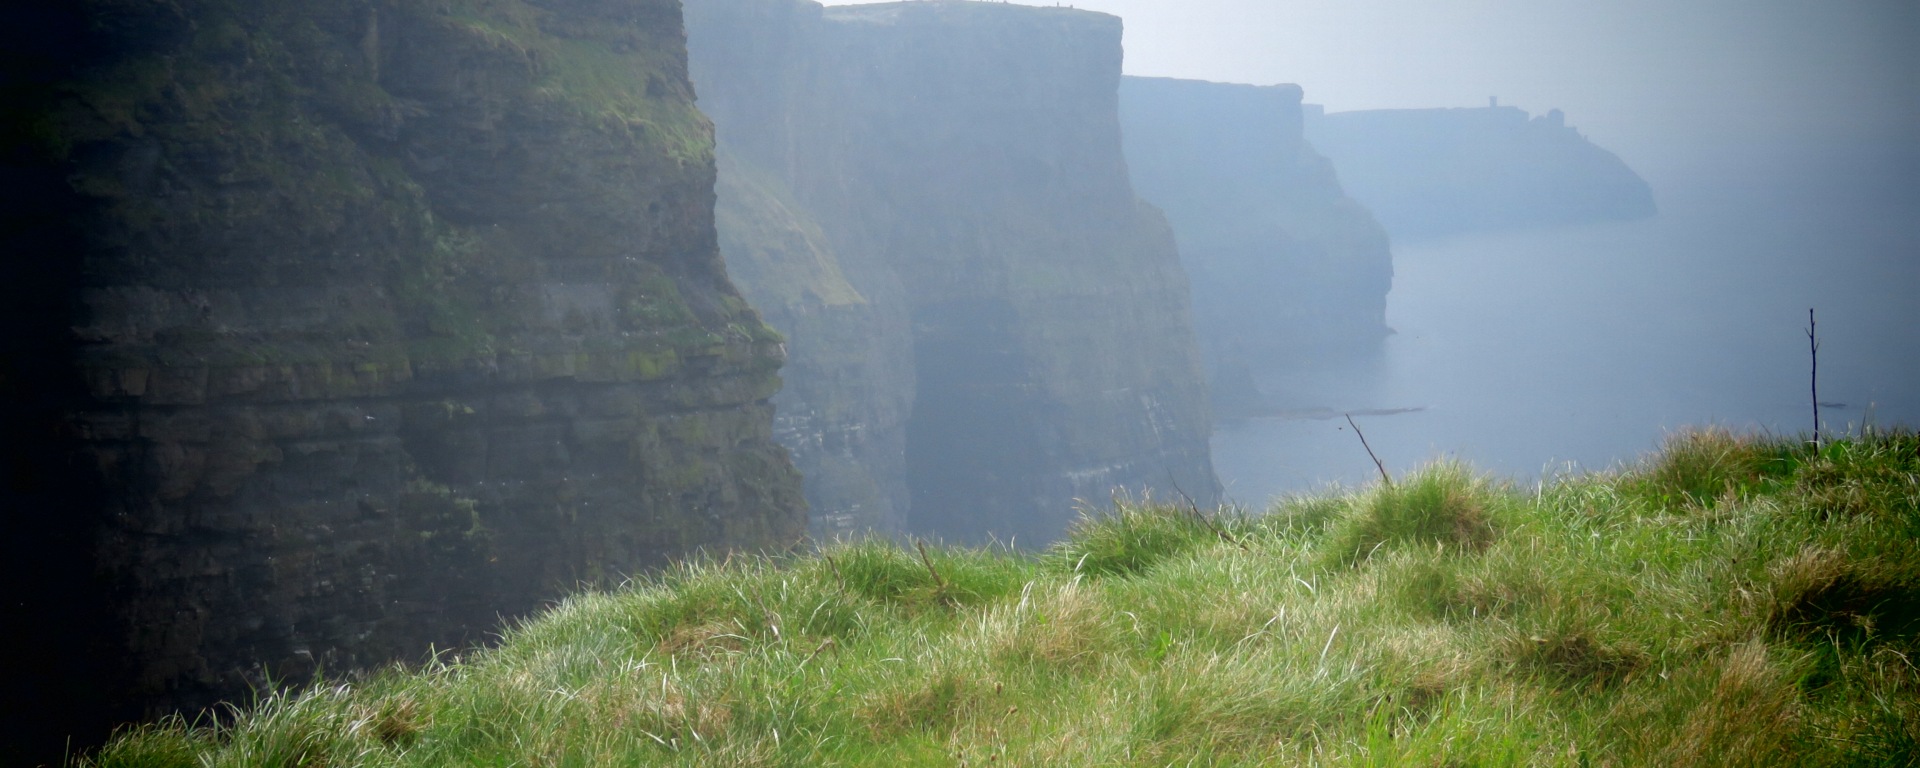 Tiny Tourists at the Cliffs of Moher Ireland - Shamrocker Adventure Tours - by Anika Mikkelson - Miss Maps - www.MissMaps.com